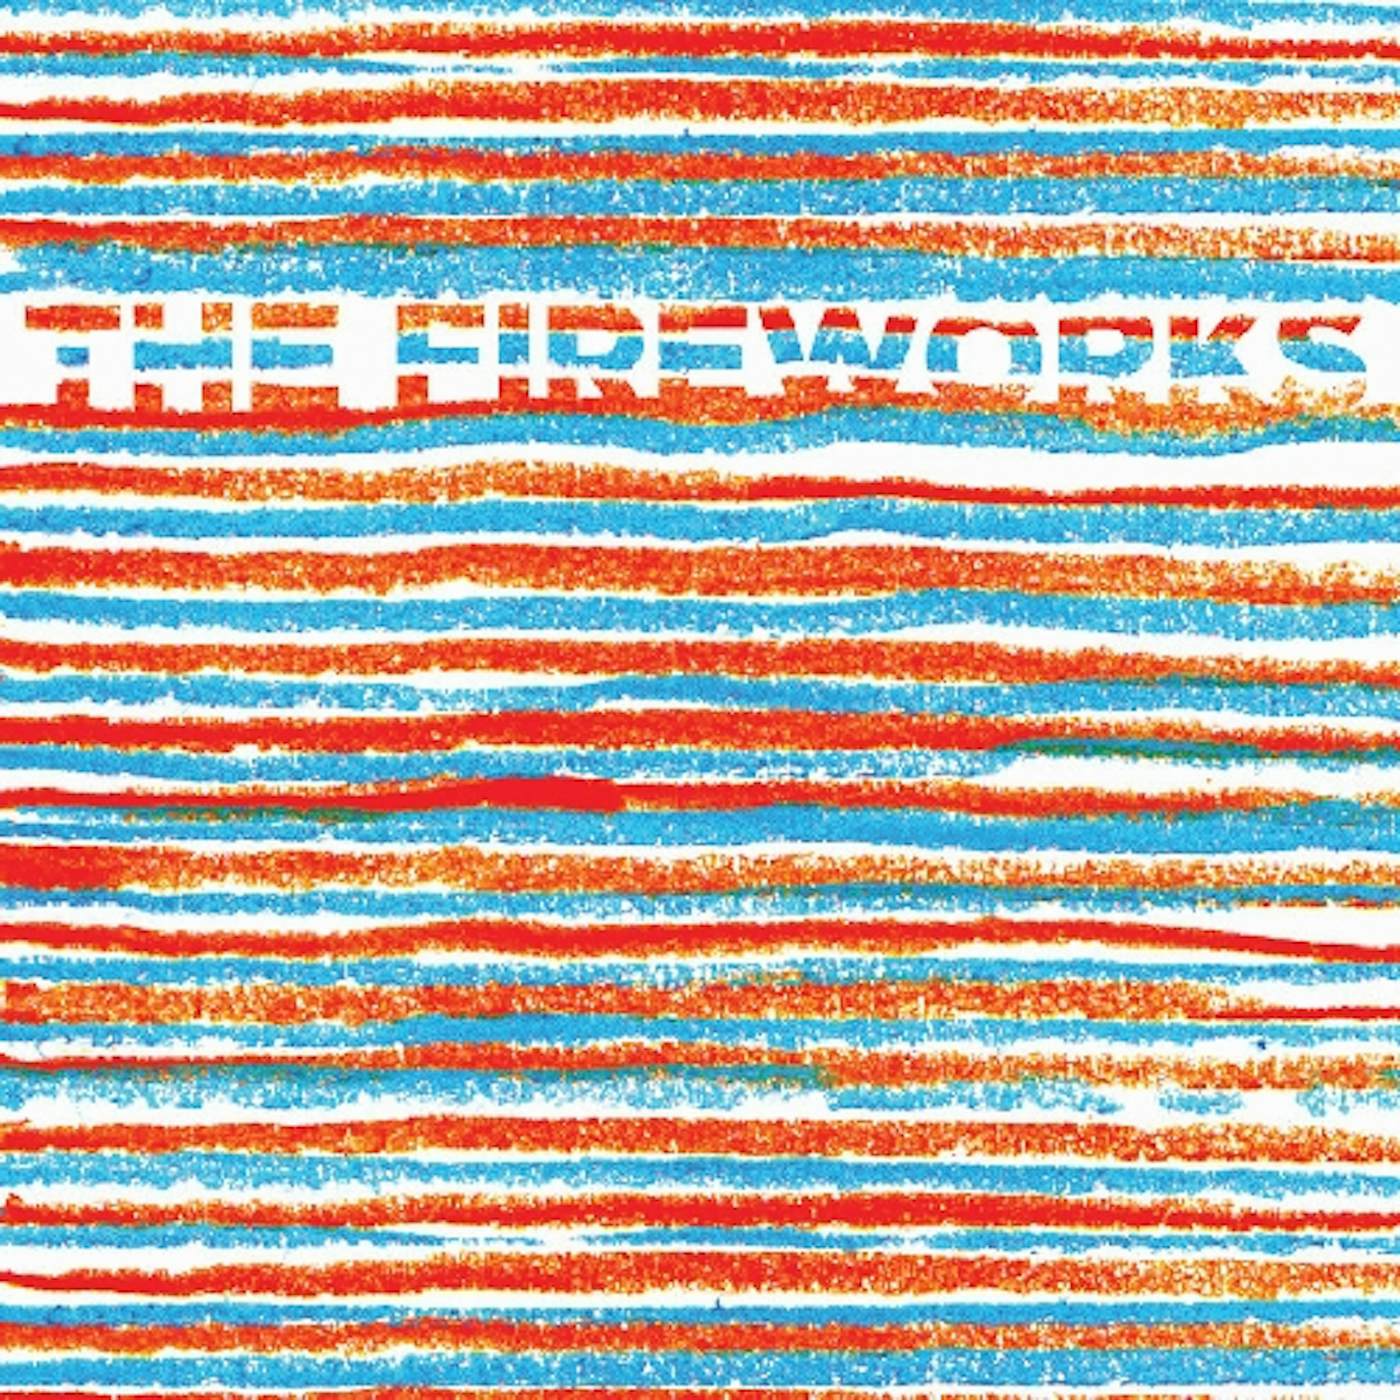 FIREWORKS (EP) Vinyl Record